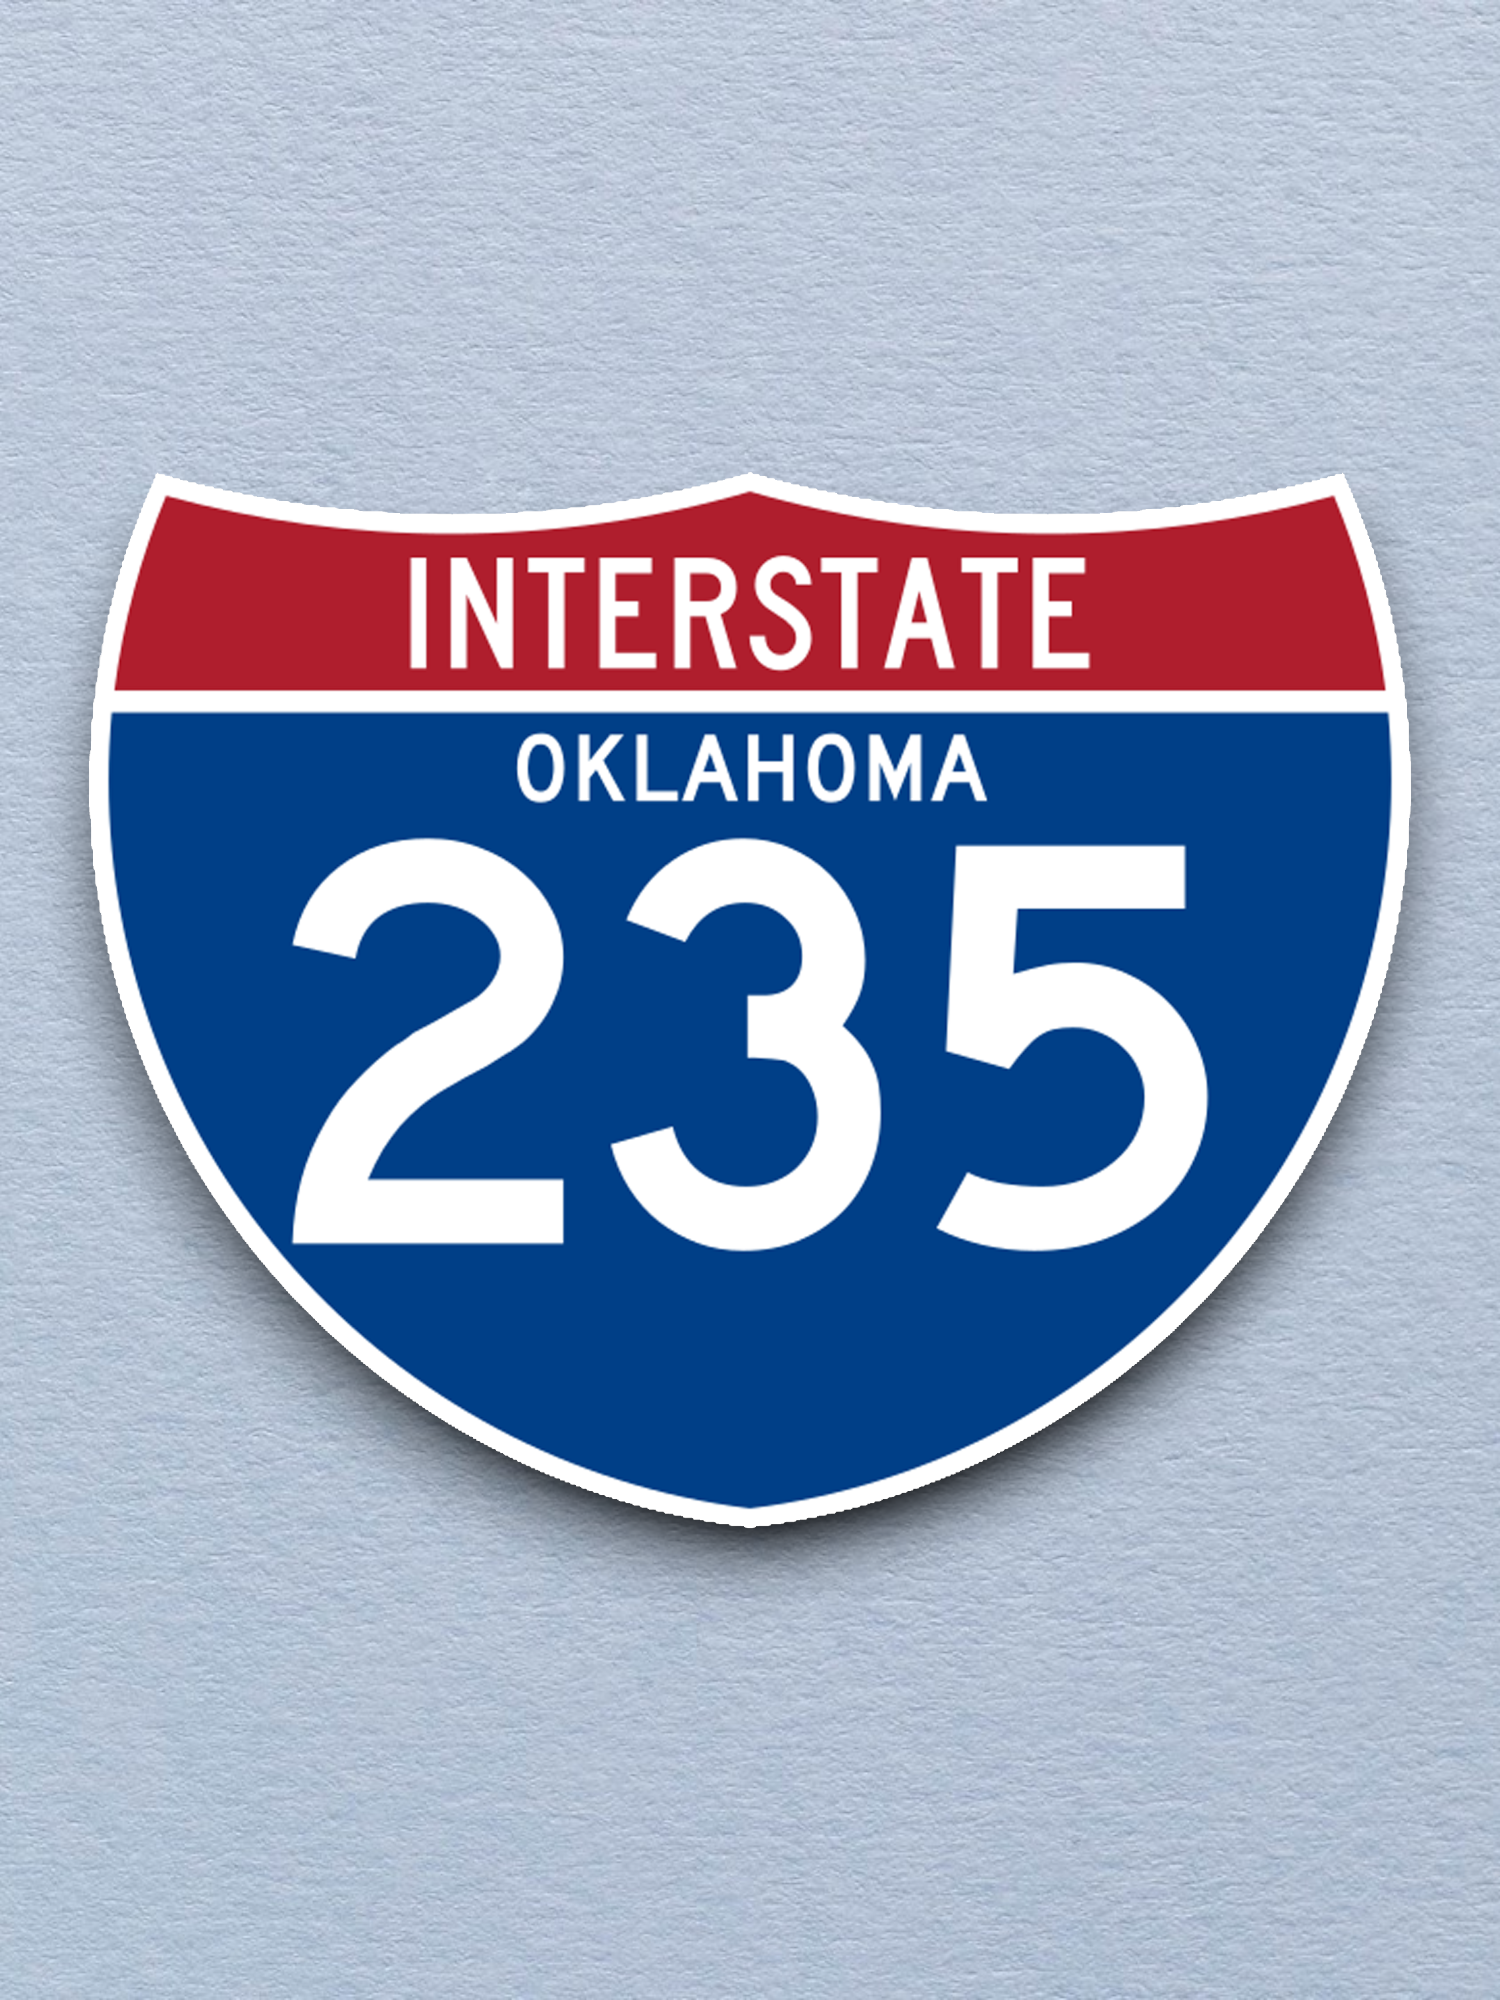 Interstate I-235 Oklahoma Road Sign Sticker